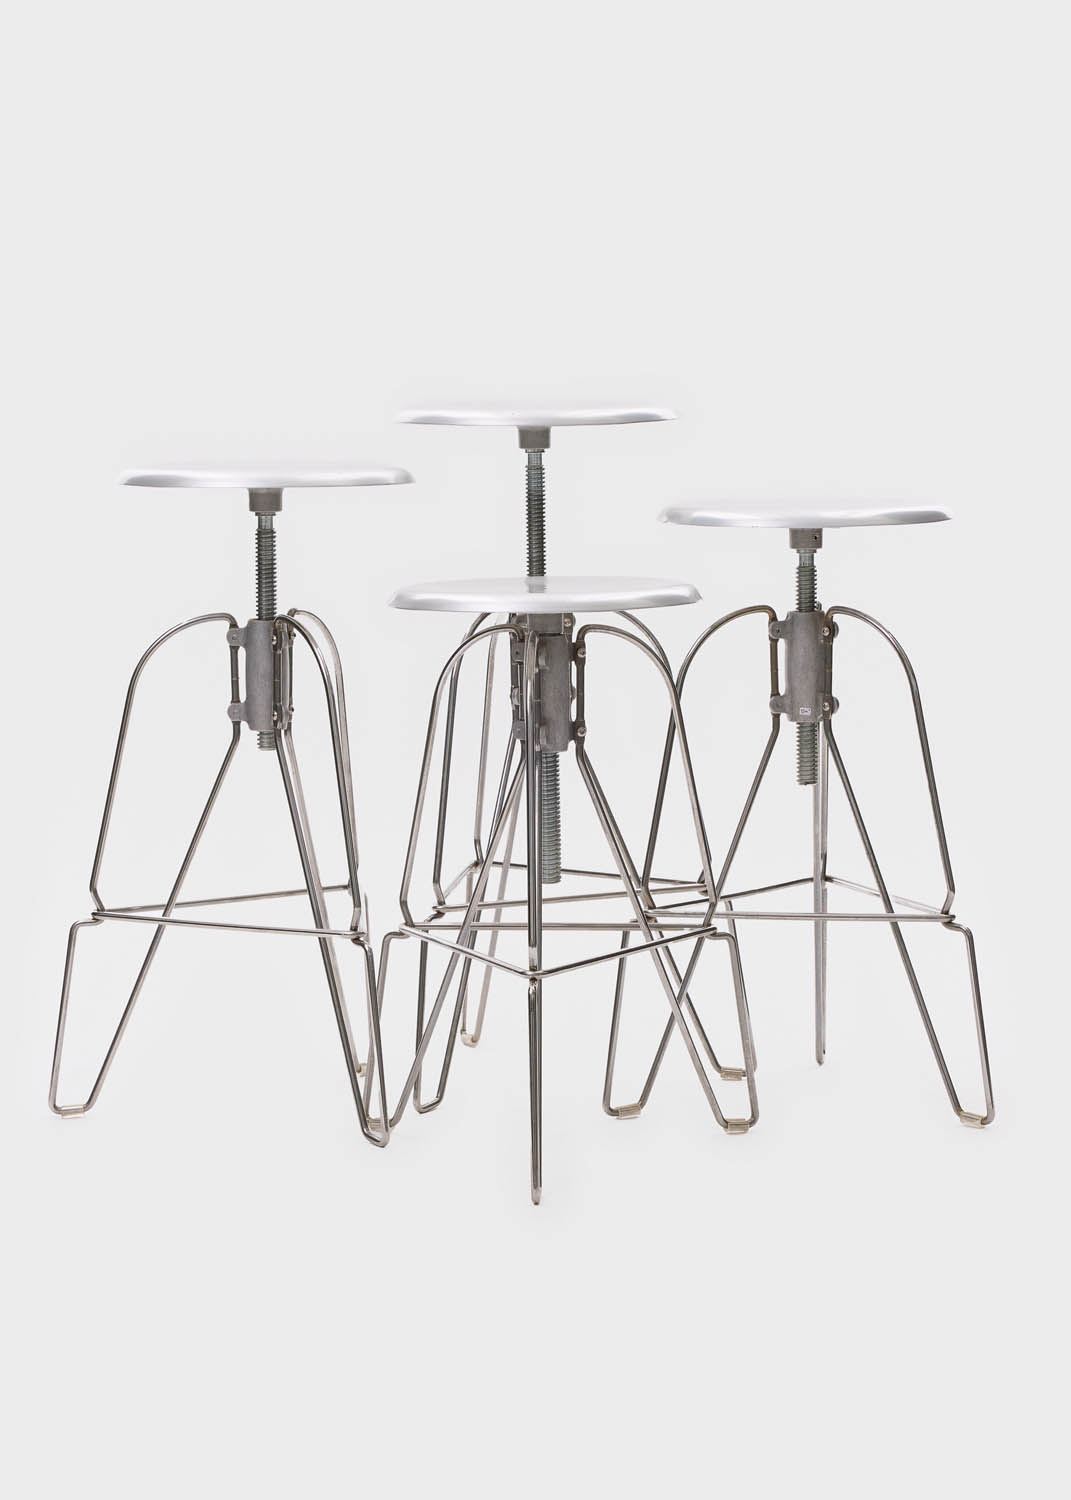 Art Object Design - Jeff Covey Metal Adjustable Stools - Set of Four